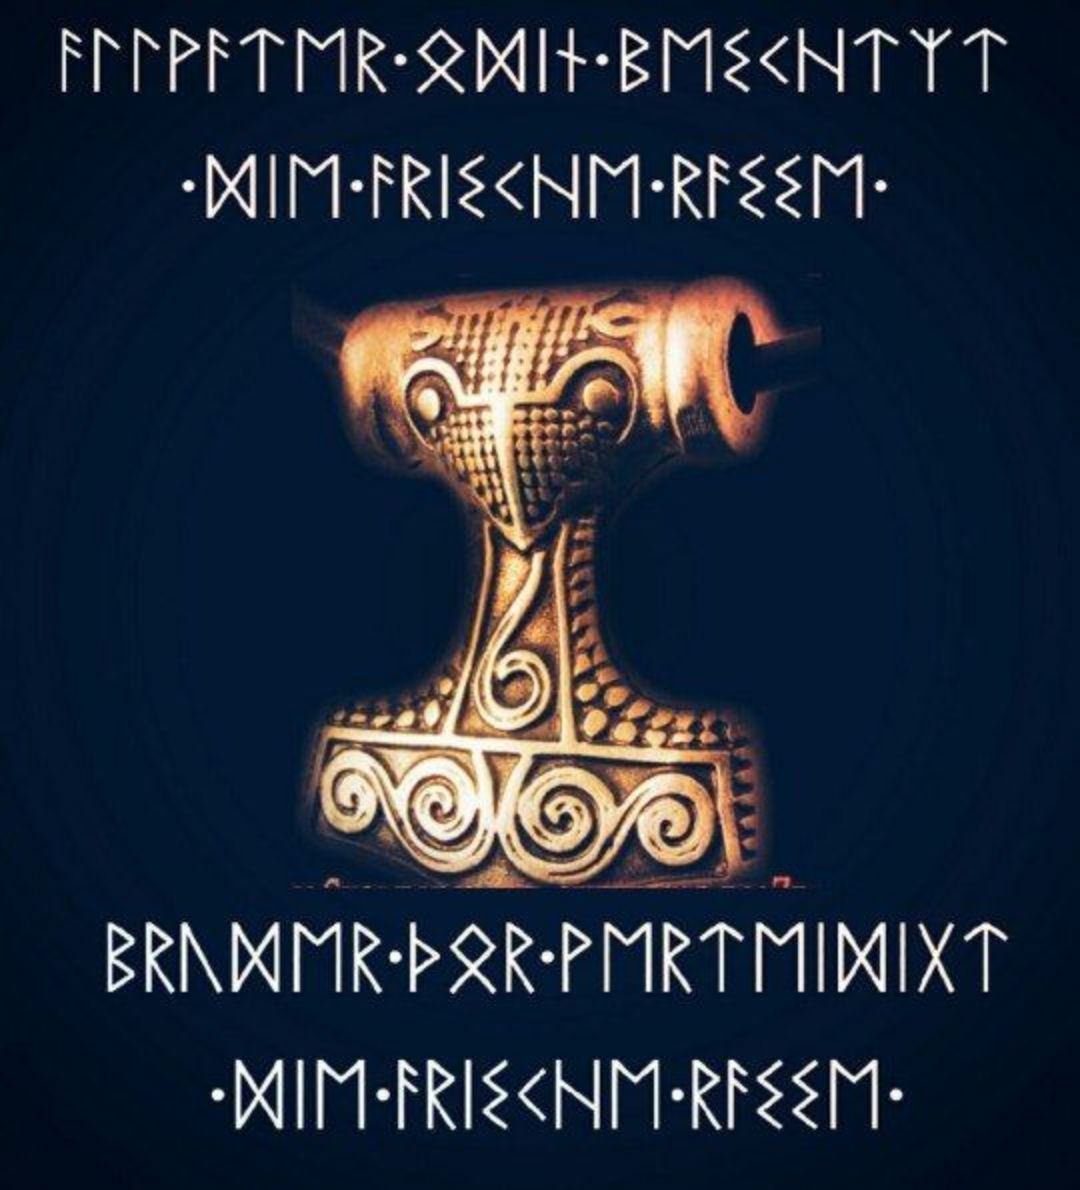 Discuss .....
#Mjolnir
#Thor
#Runes
#vikingrunsthroughmyblood
#vikings
#vikingseverywhere
#vikinghood
#vikinglife
#vikingspirit https://t.co/OnCp5wKQUM